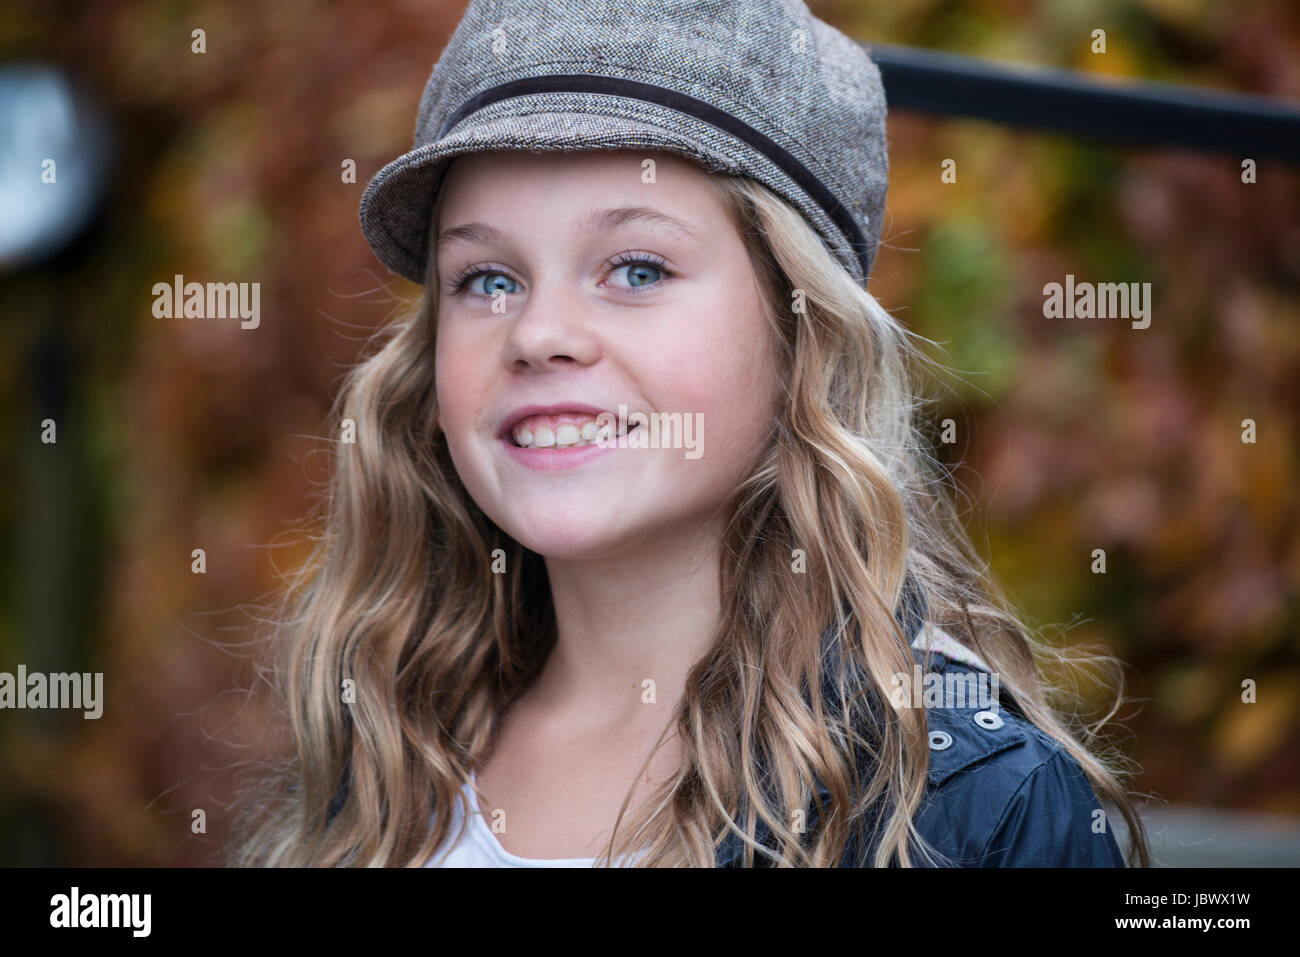 Portrait of blond girl in baker boy cap Stock Photo